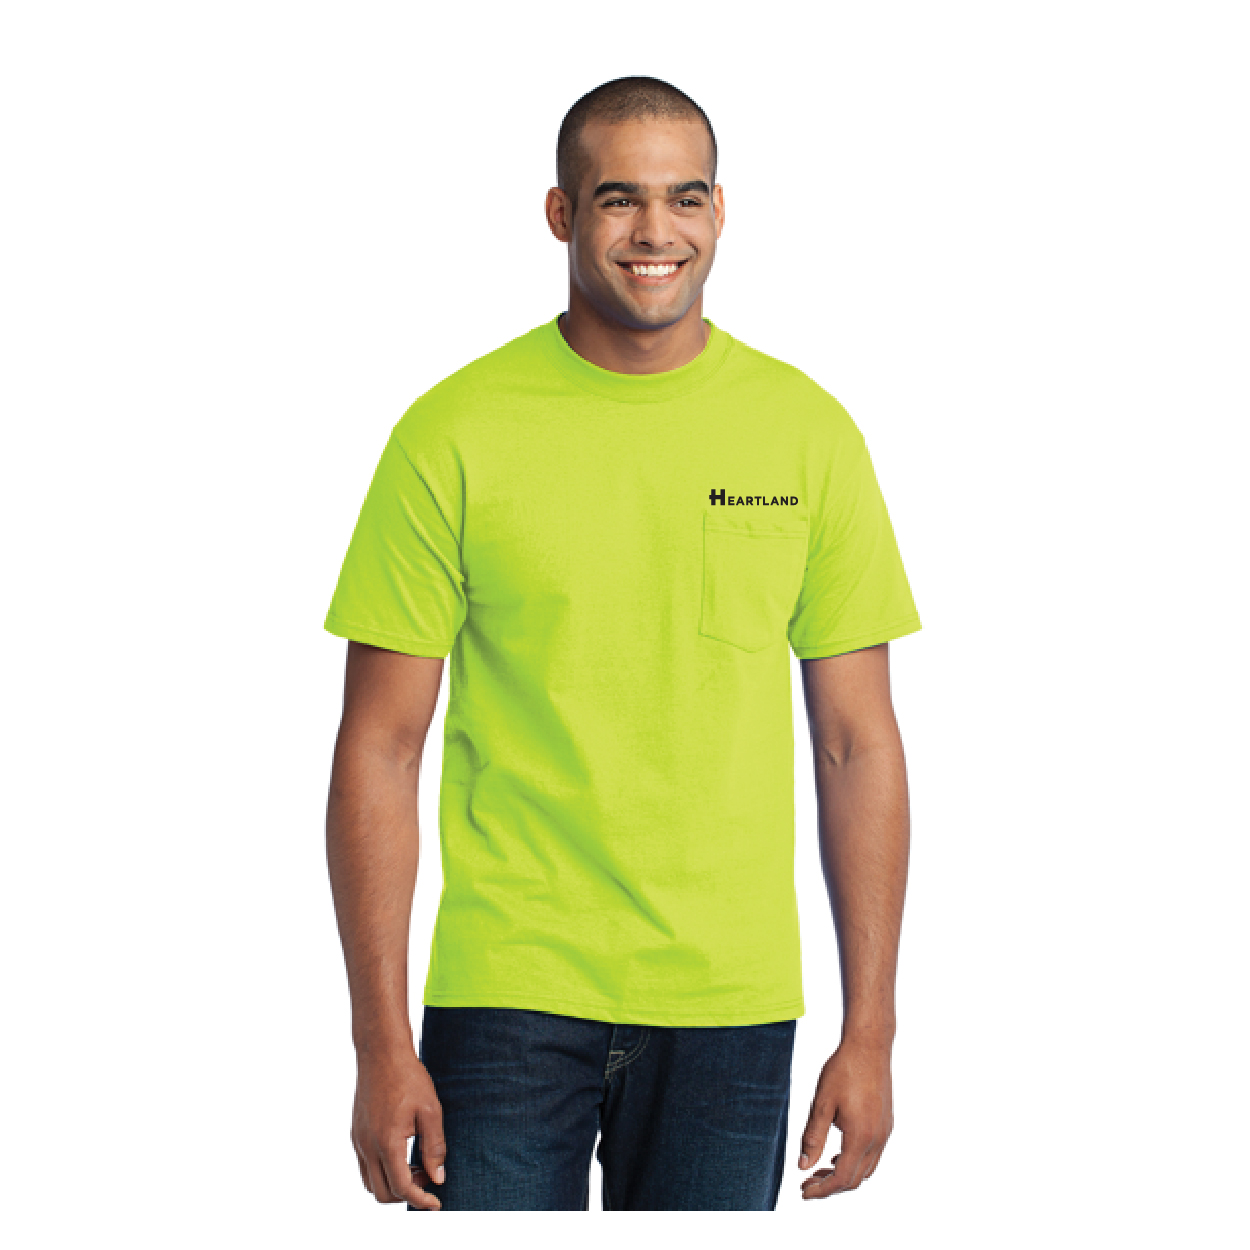 Safety Pocket T-Shirt - Heartland Companies